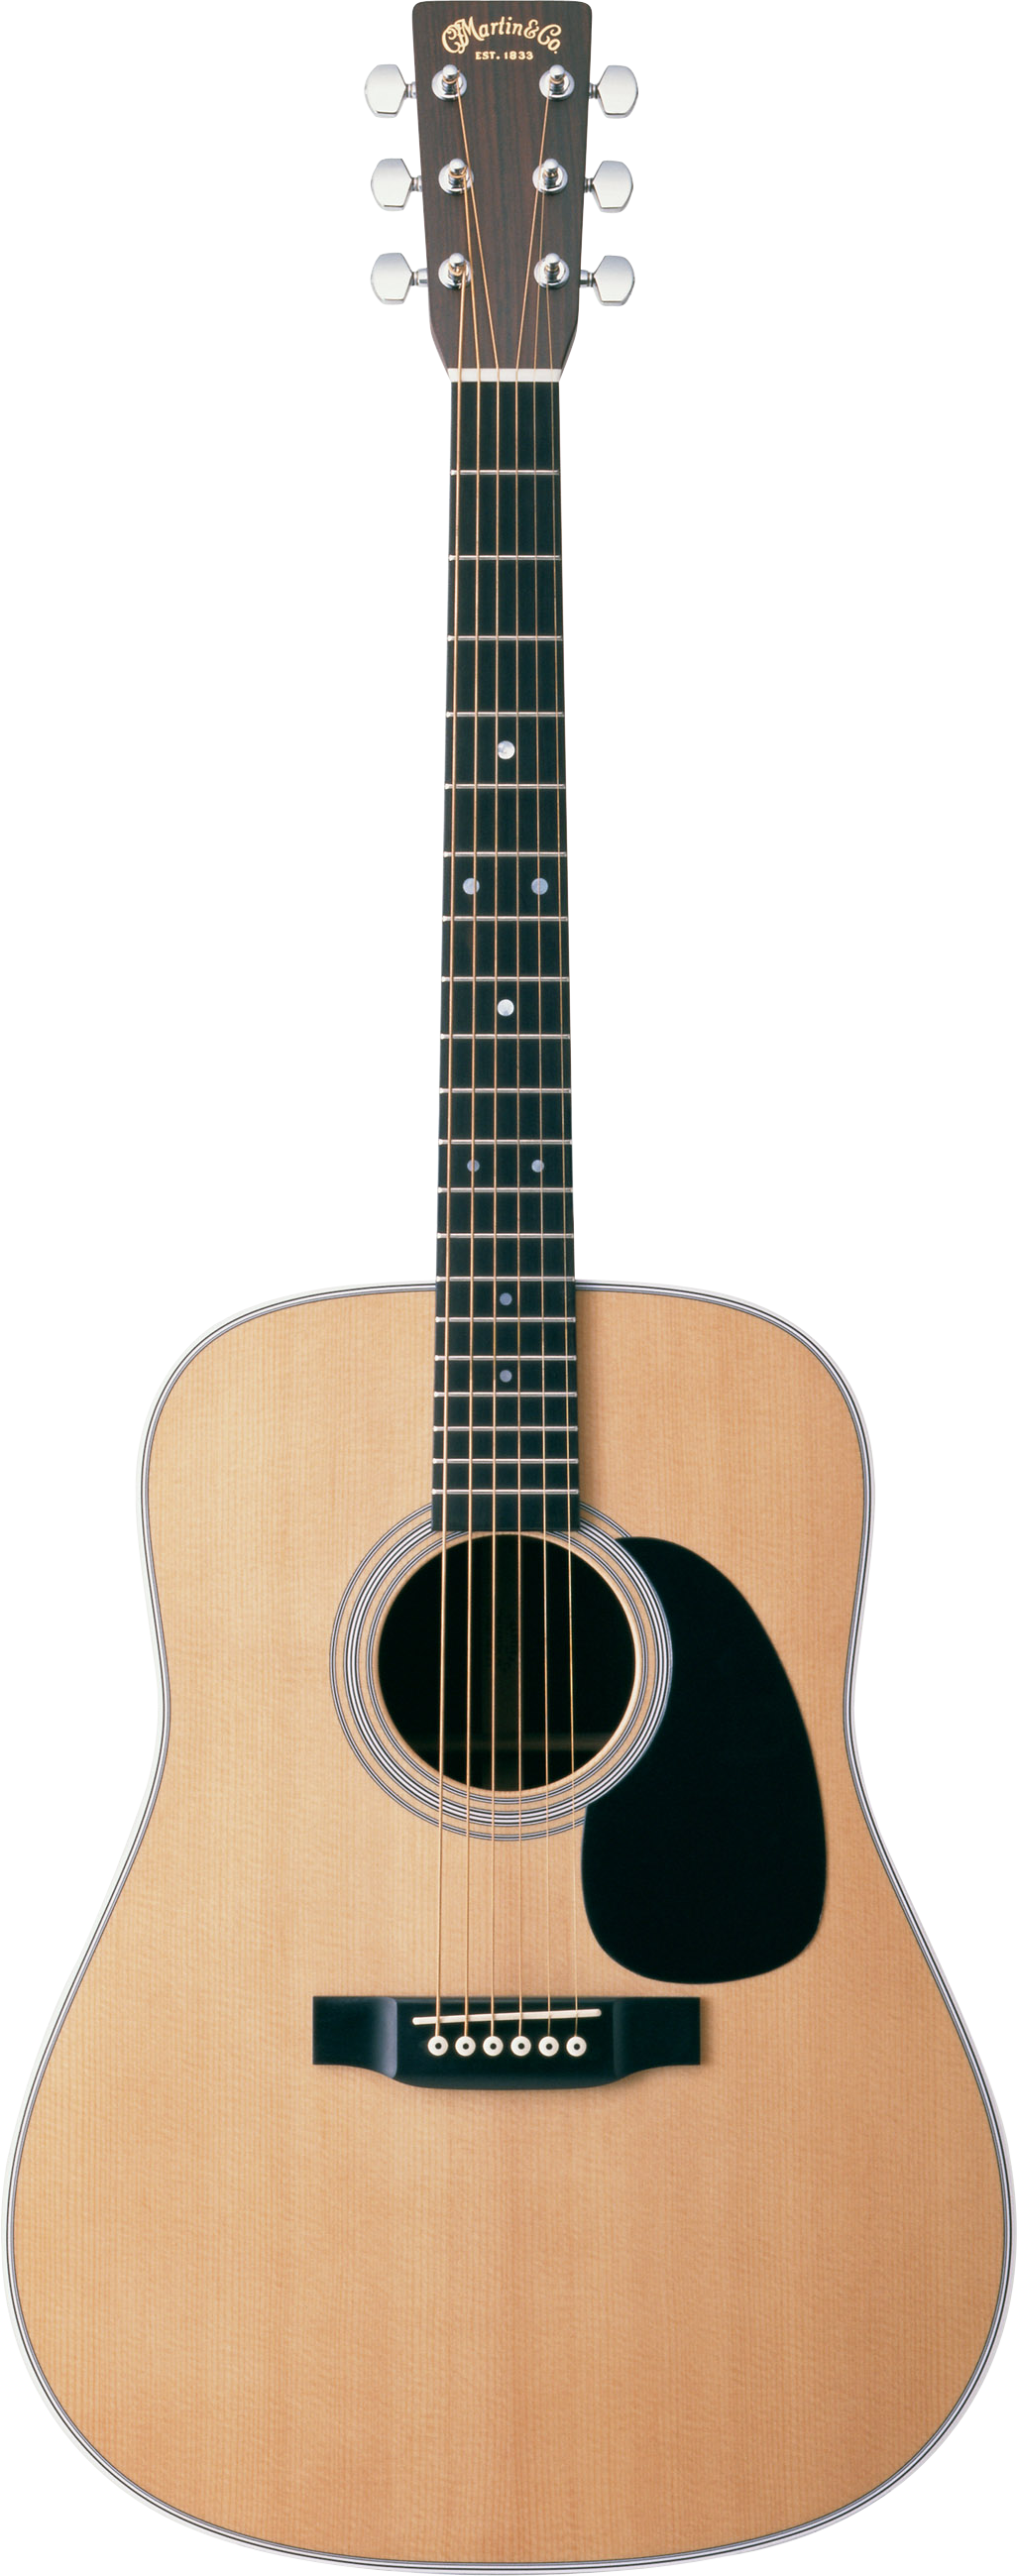 Acoustic Guitar Free PNG Image